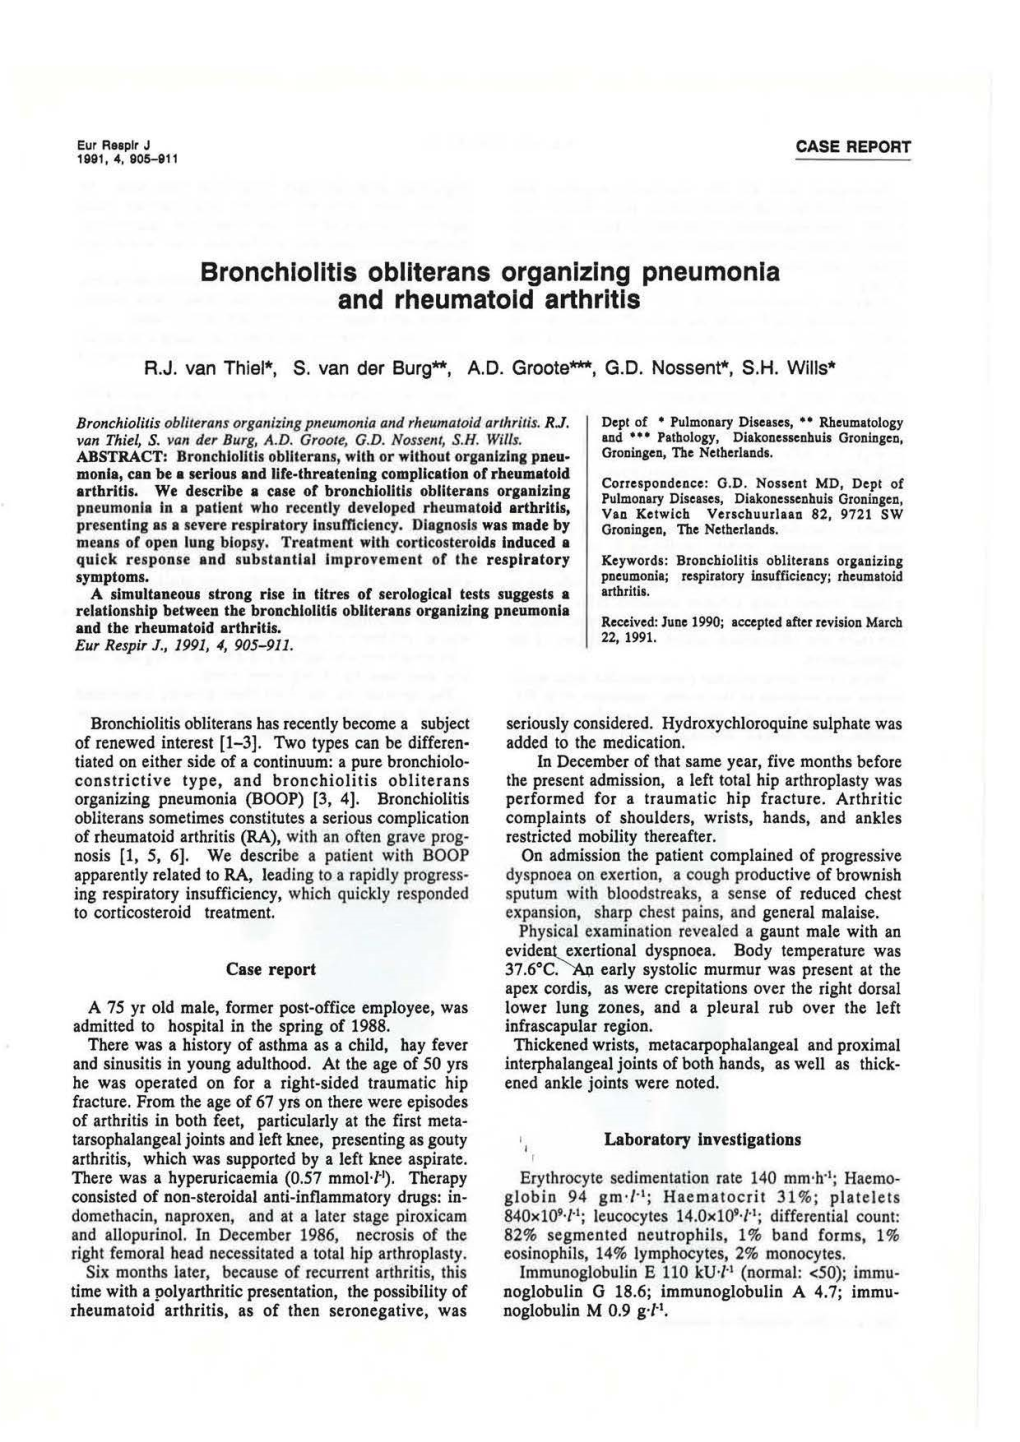 Bronchiolitis Obliterans Organizing Pneumonia and Rheumatoid Arthritis